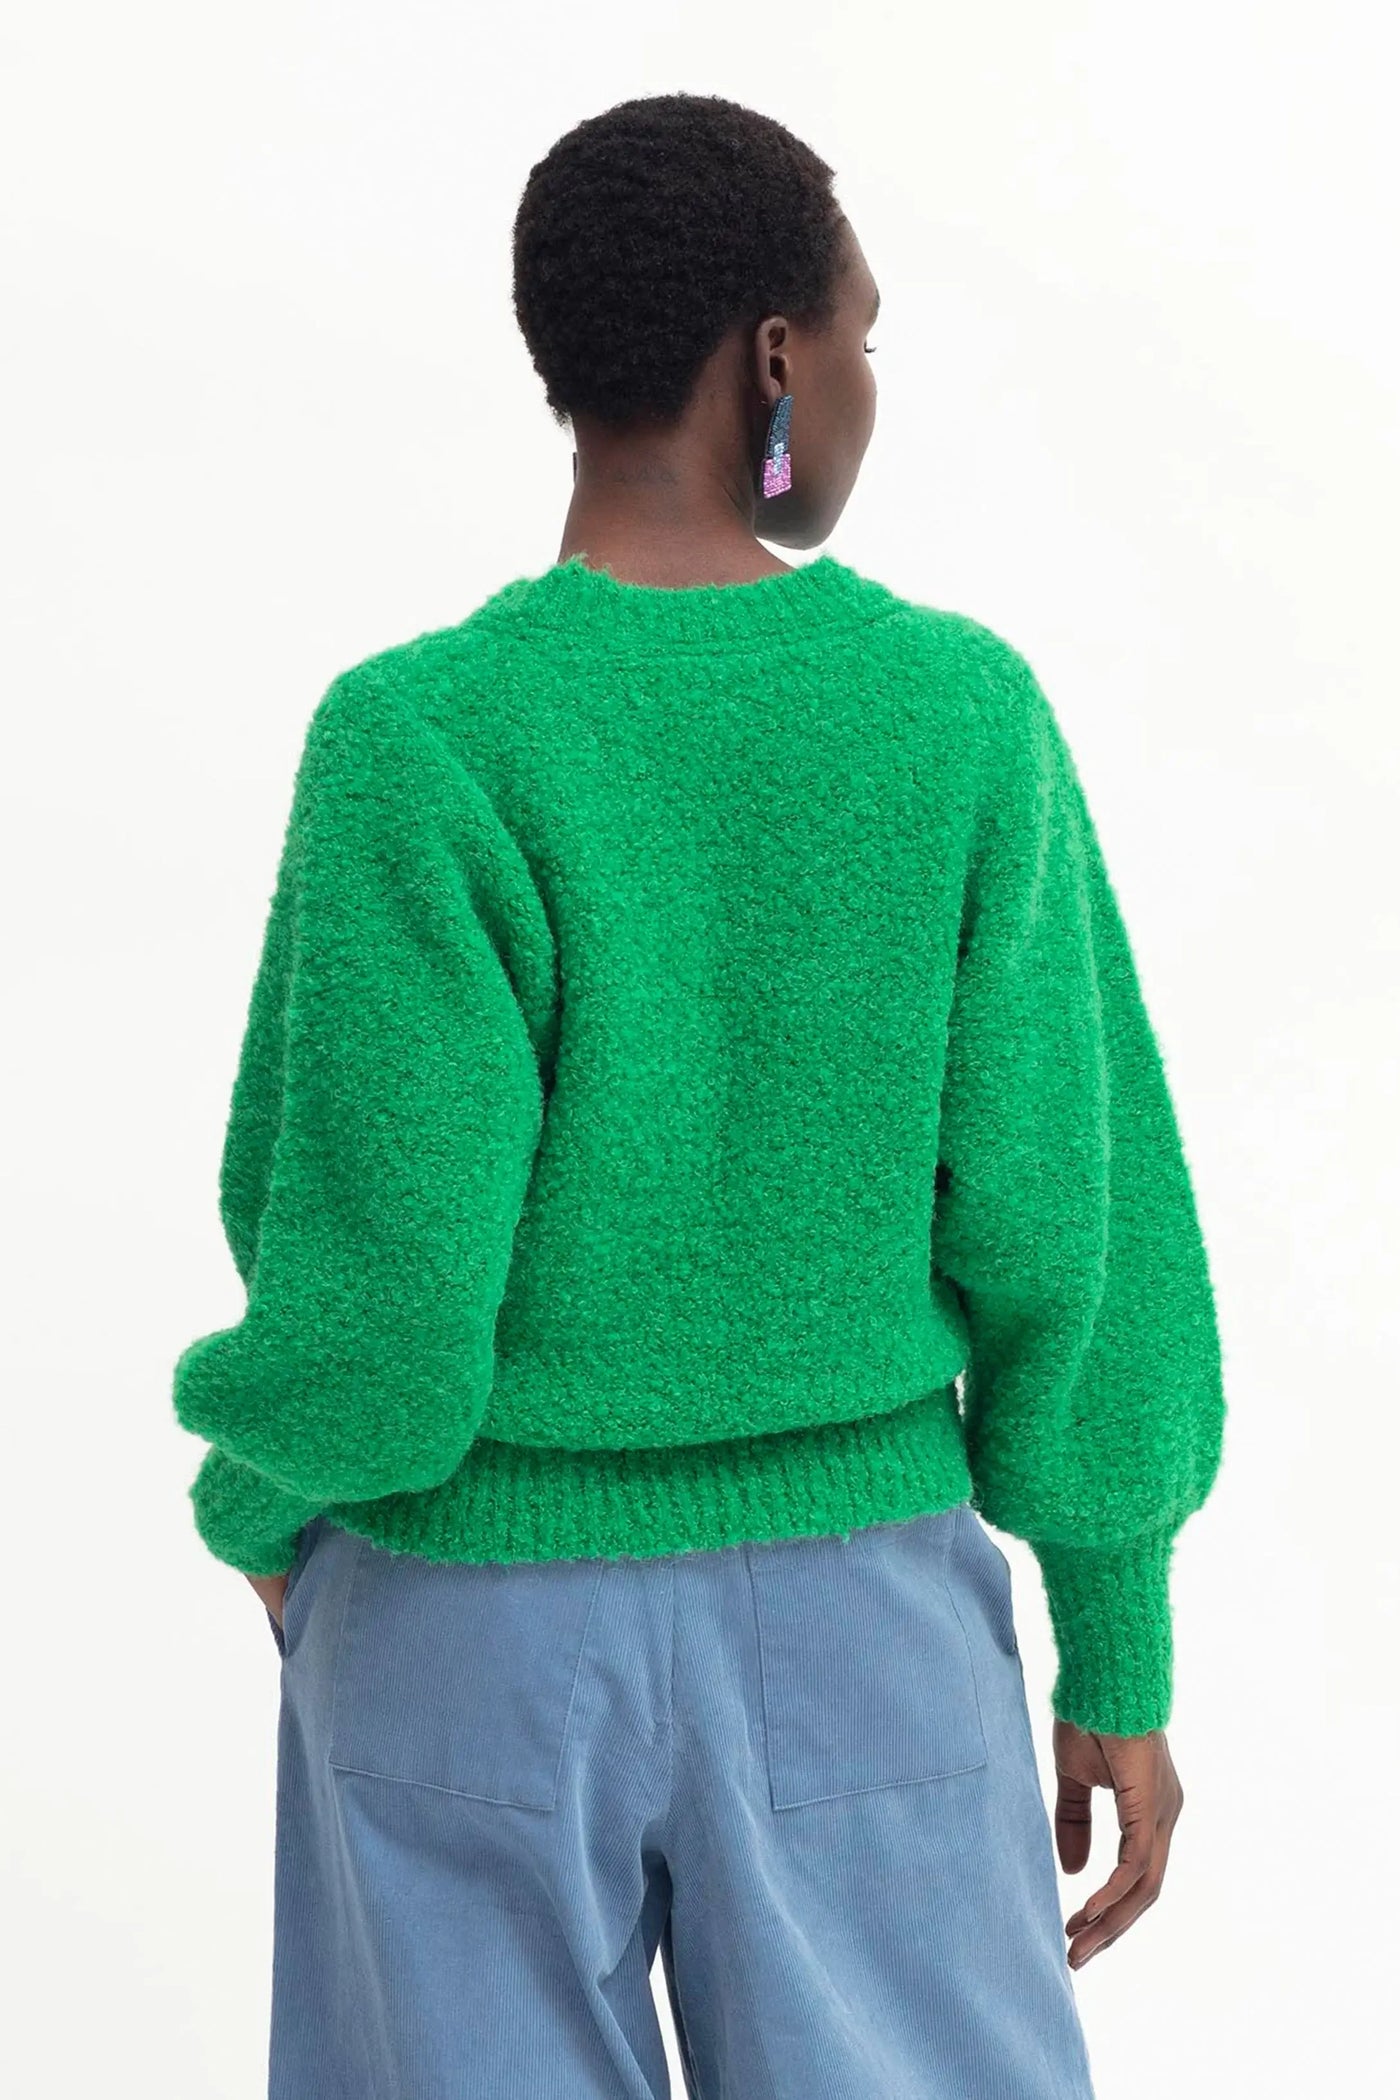 Tukko Sweater - Ivy Green